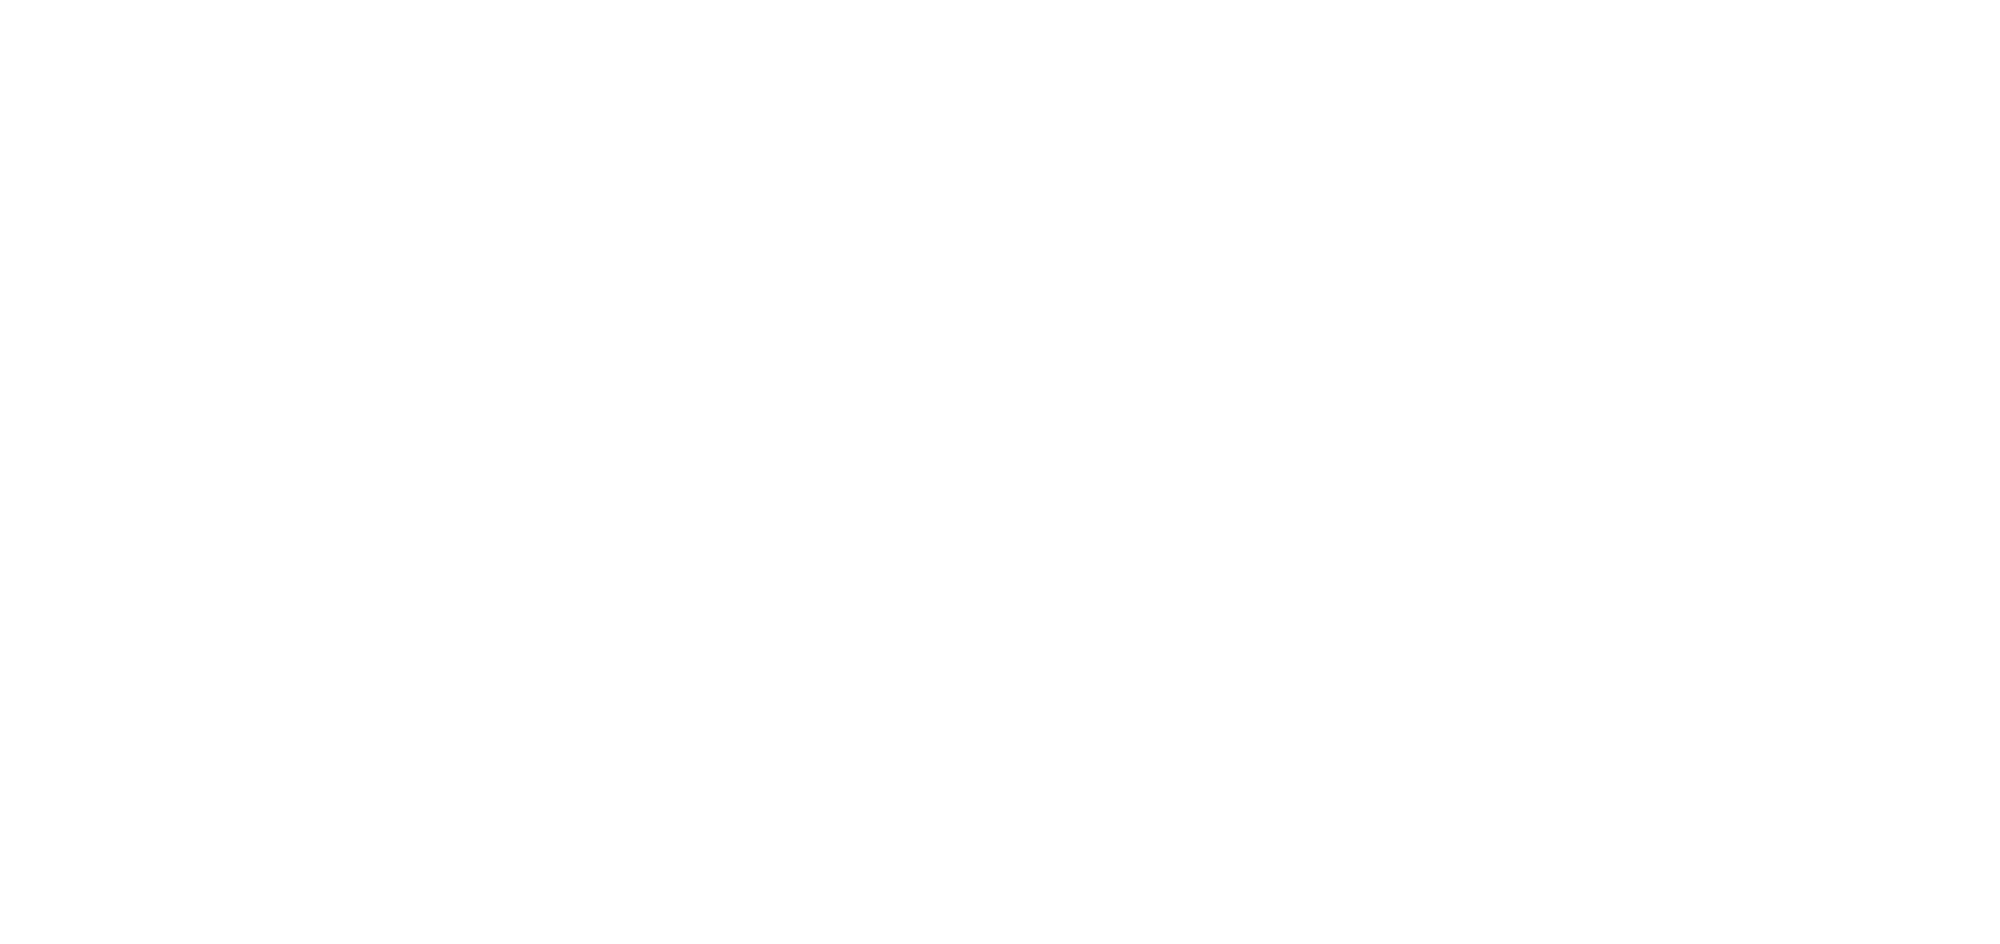 trip-advisor-logo